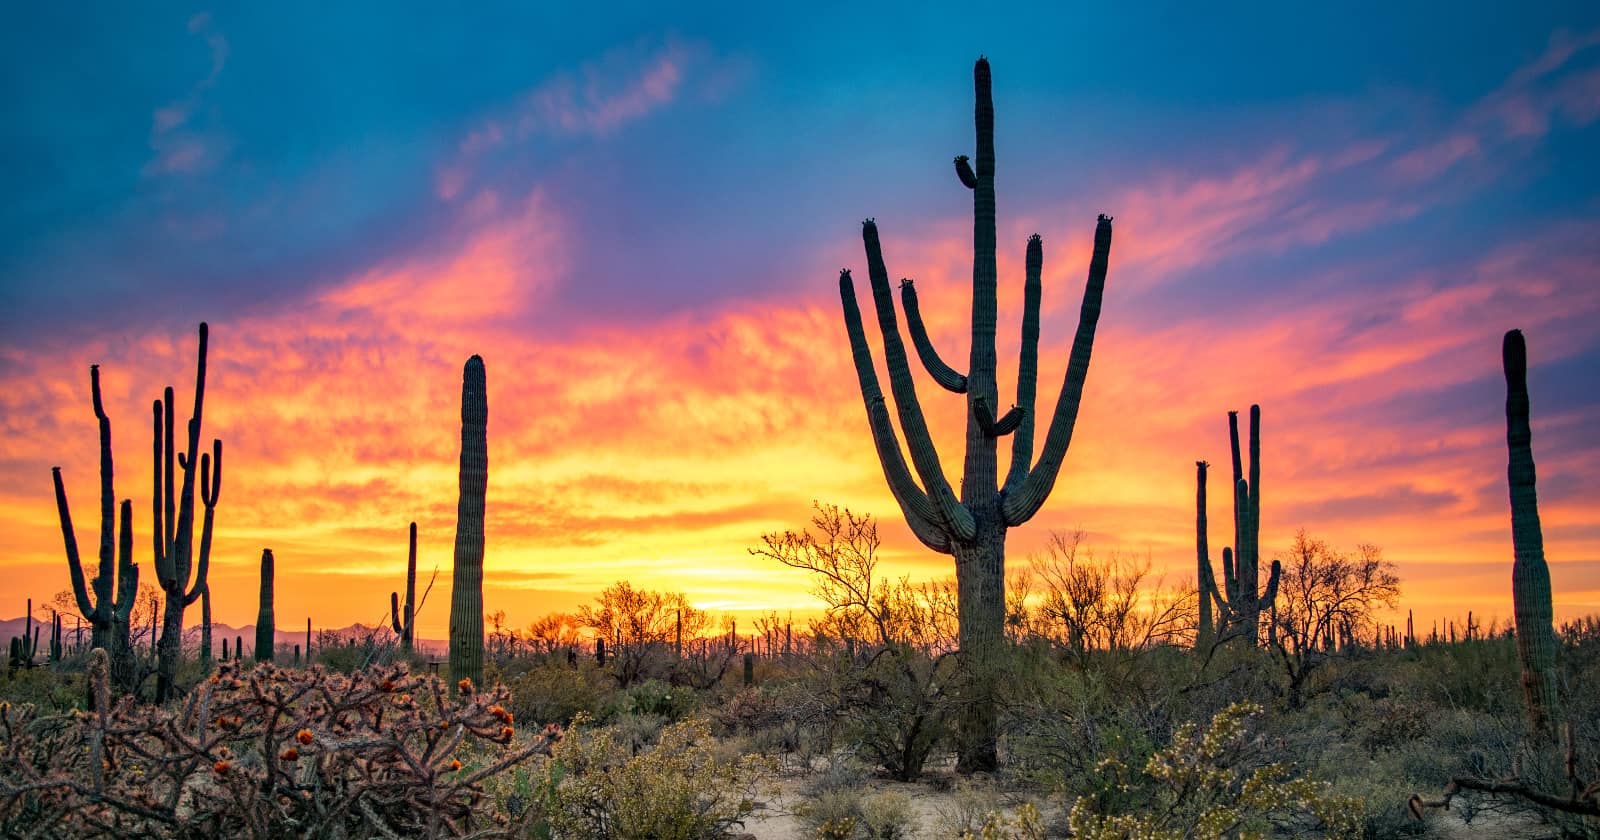 Dramatic Sunset in Arizona Desert: Colorful Sky and Cacti/ Saguaros in Foreground - Saguaro National Park, Arizona, USA